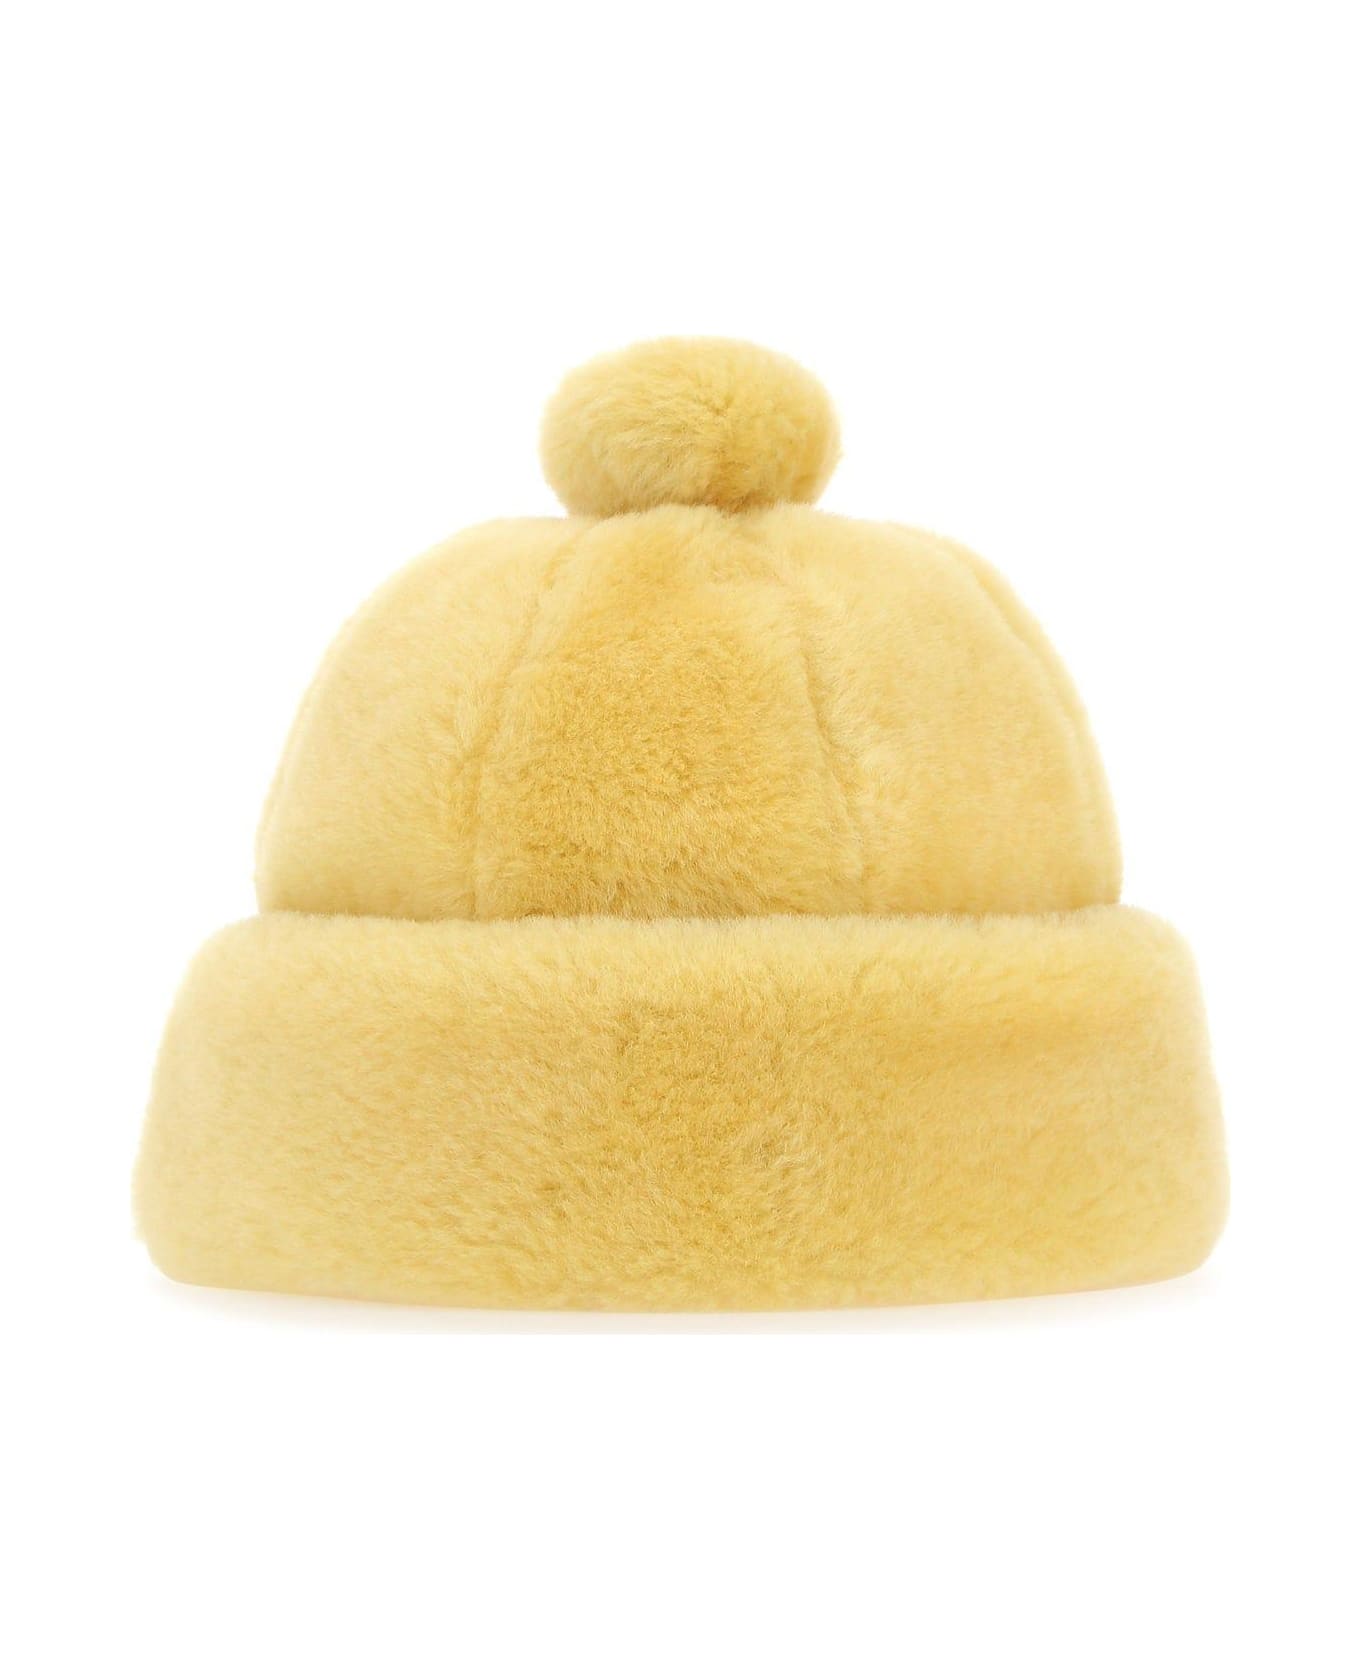 Lanvin Pastel Yellow Shearling Beanie Hat - YELLOW